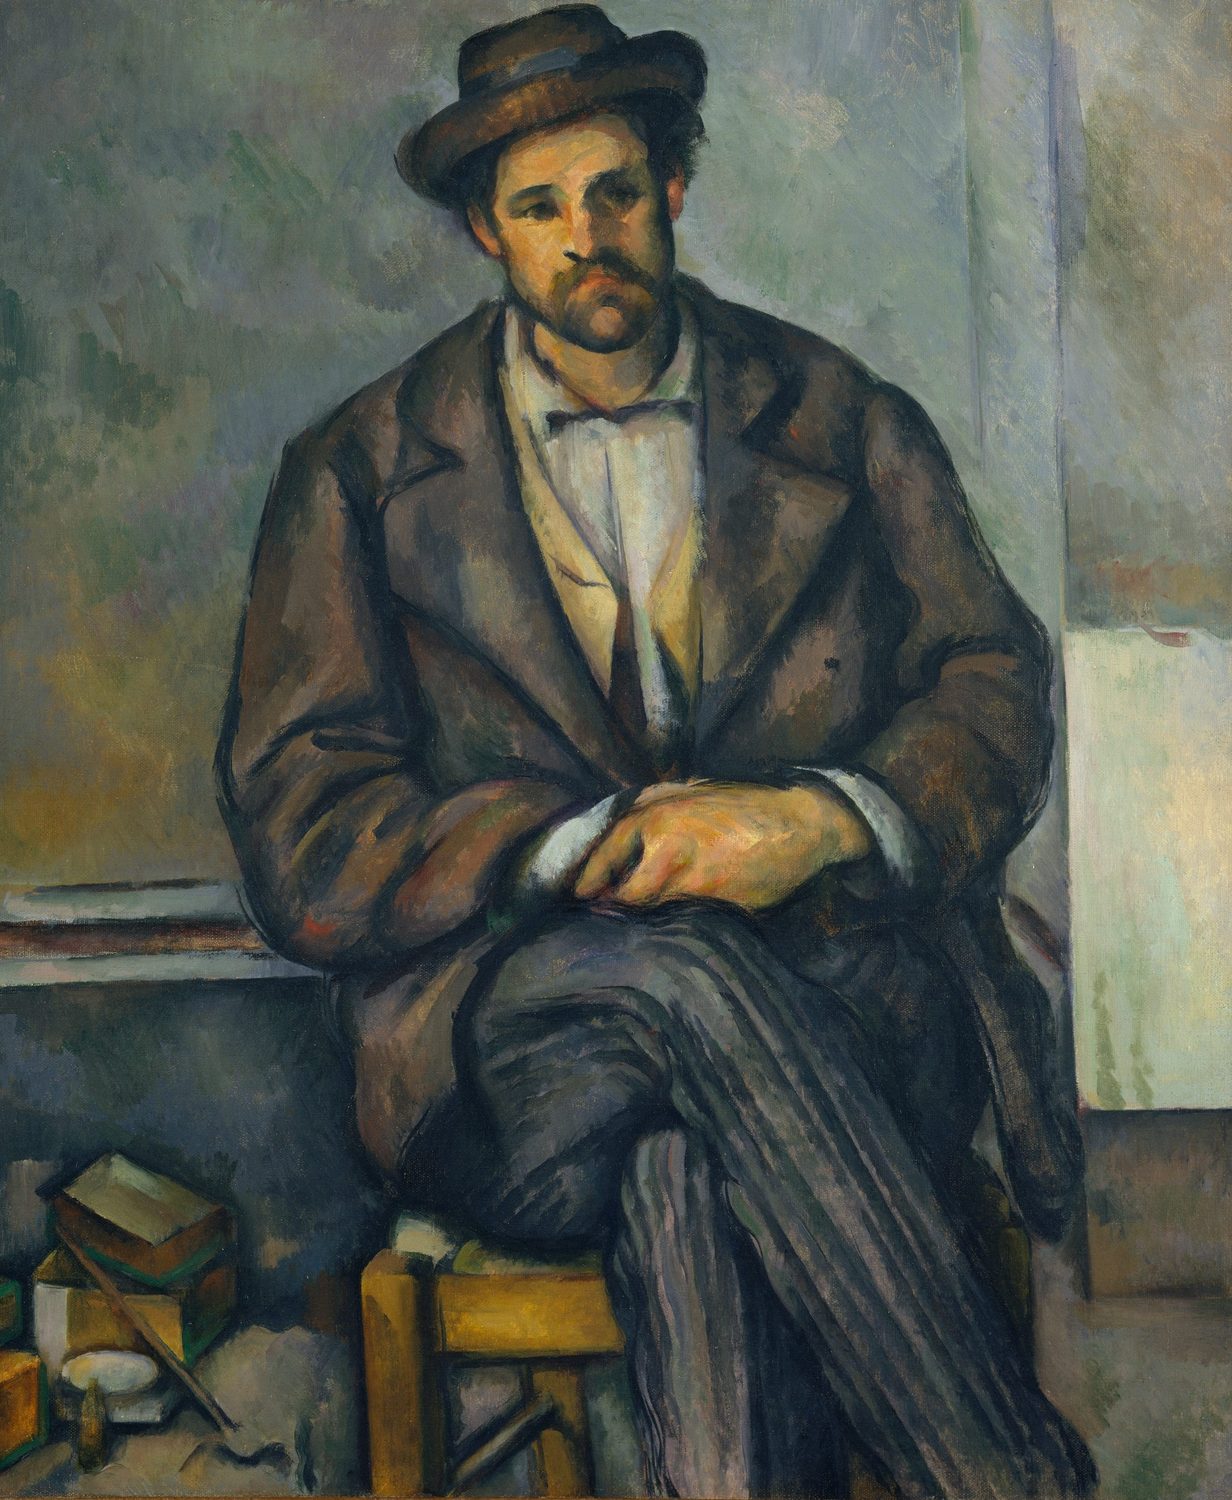 Paul Cézanne: founding father of modern art